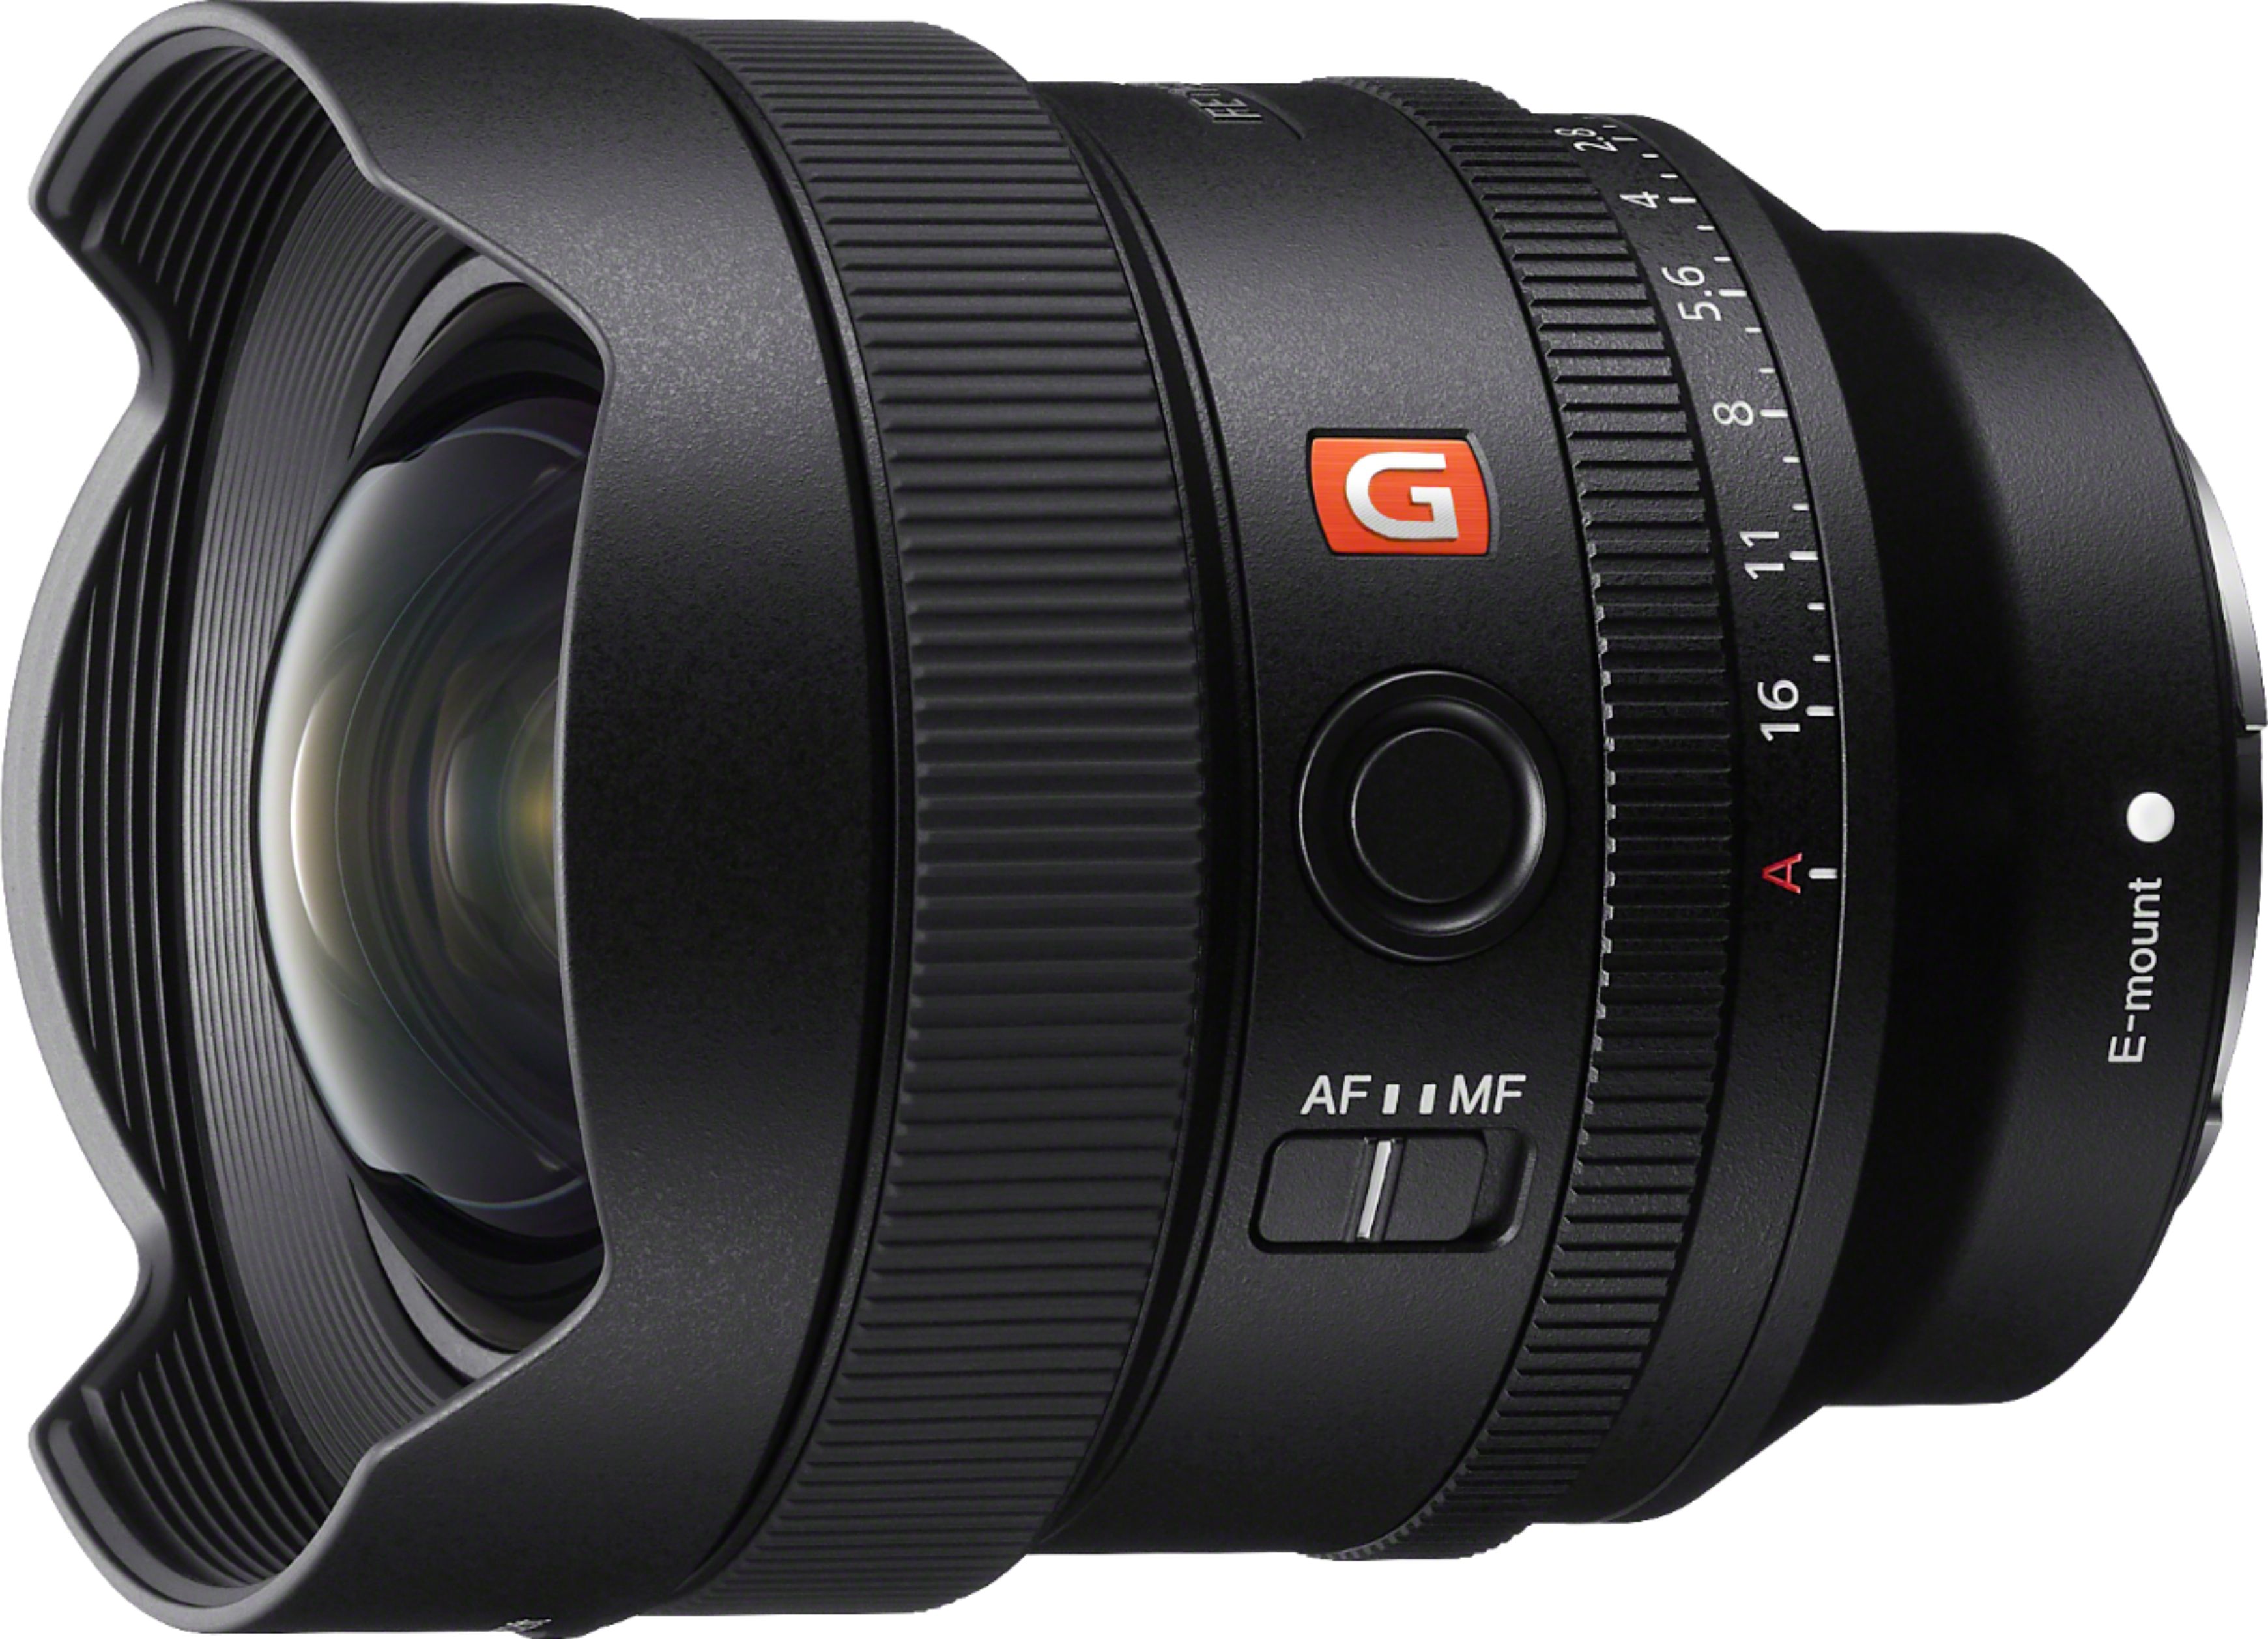 FE 14mm F1.8 GM Full-frame Large-aperture Wide Angle Prime G Master Lens for Sony Alpha E-mount Cameras - Black